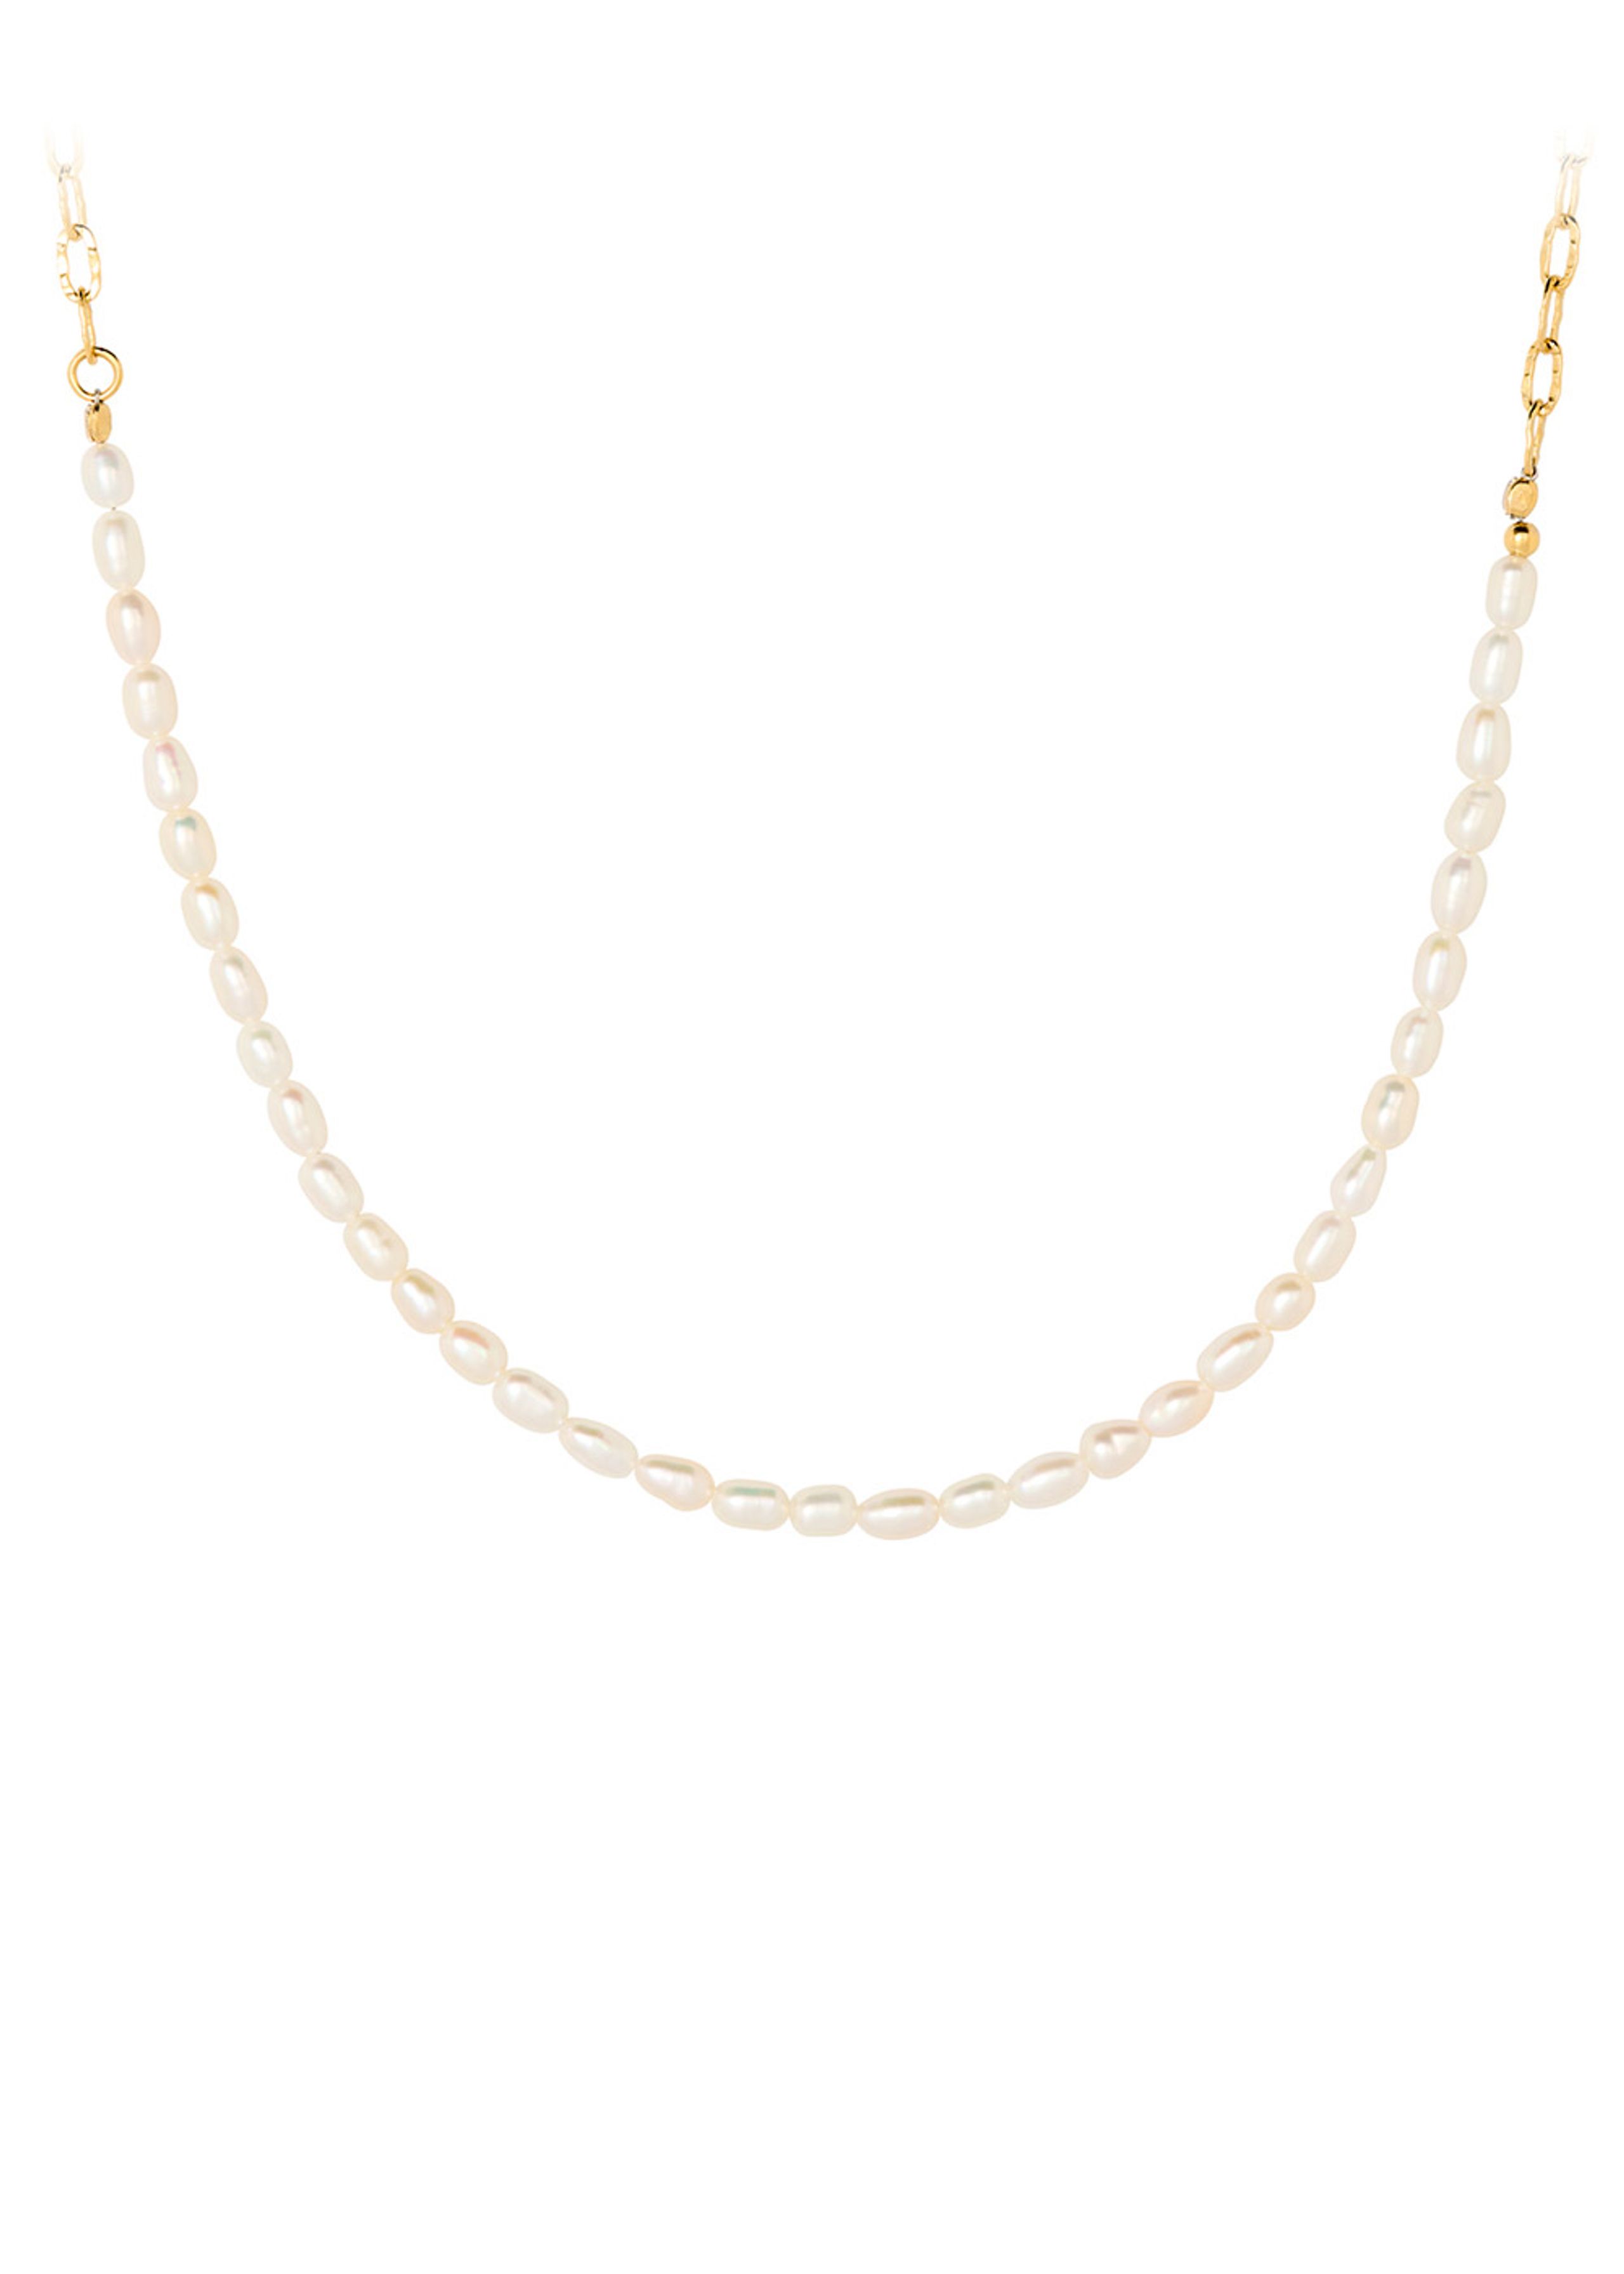 Pernille Corydon - Necklace - Seaside Necklace - Gold